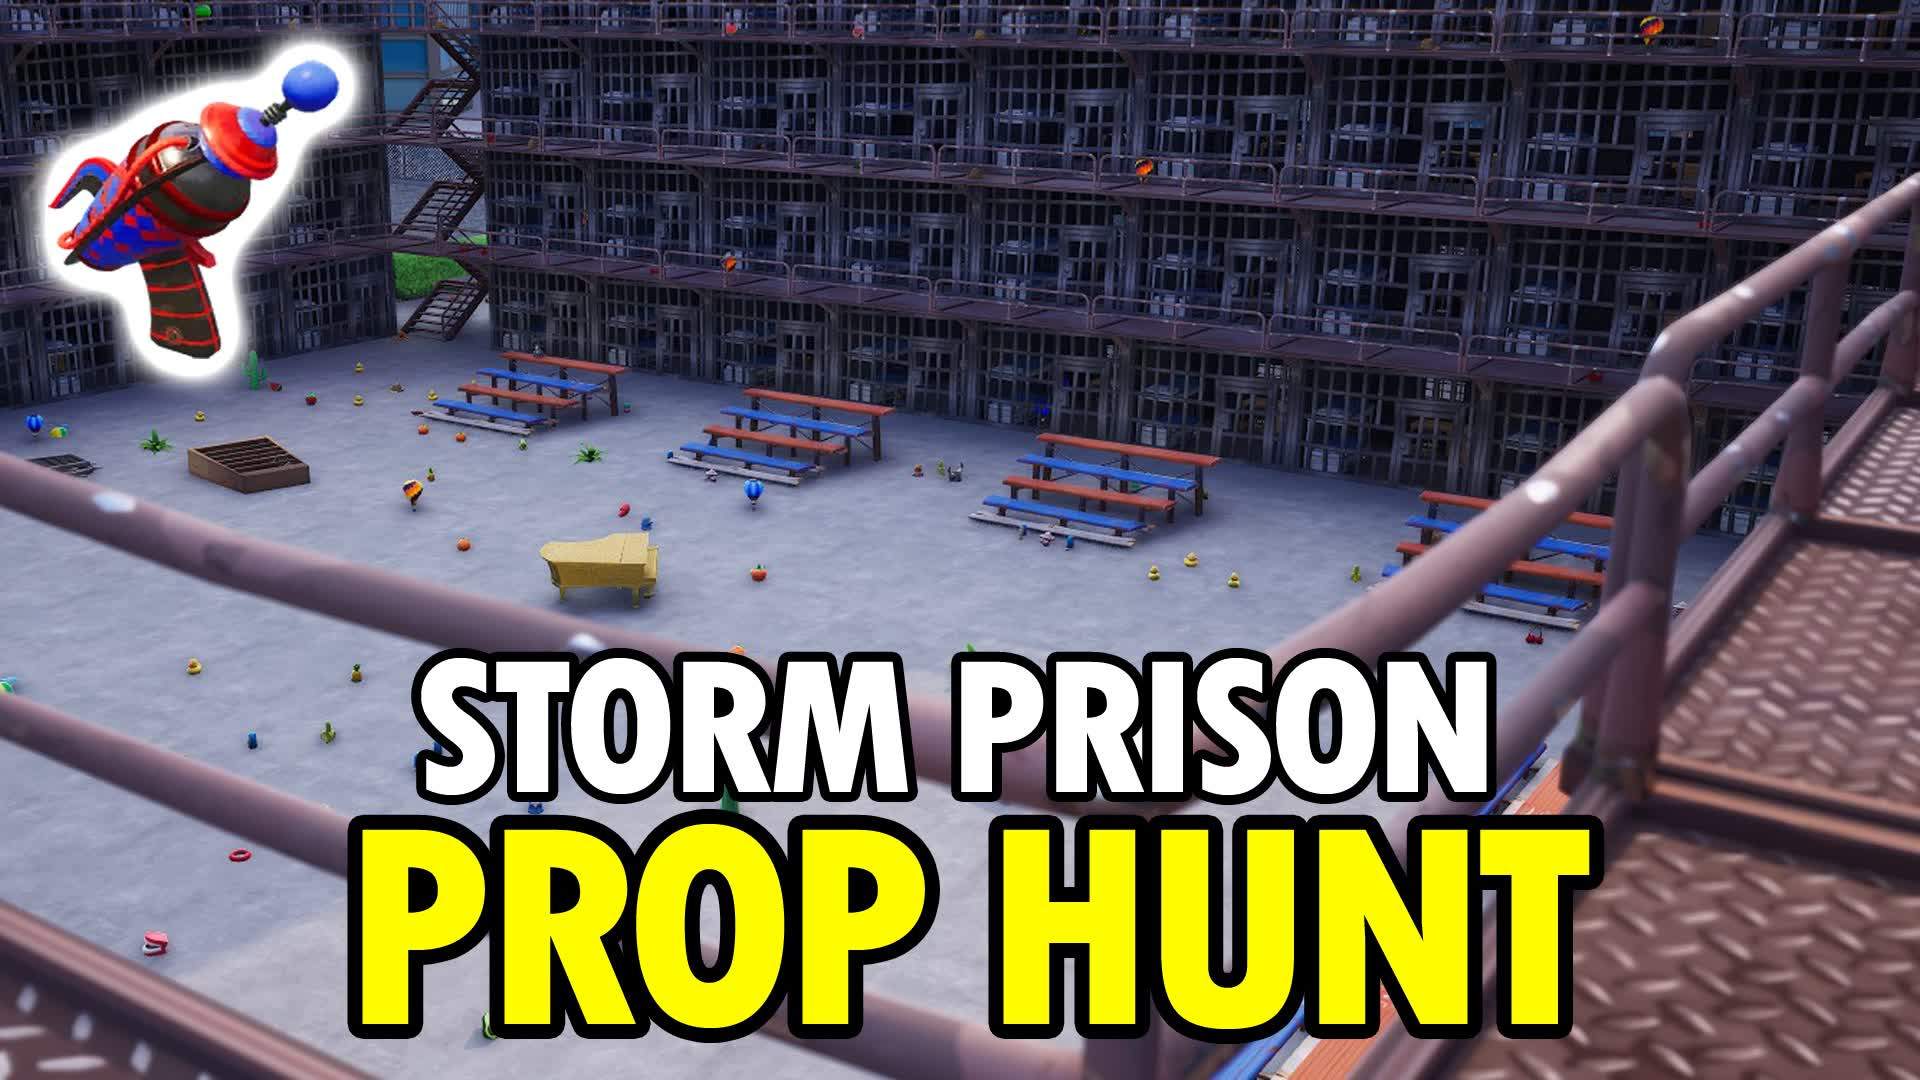 ESCONDITE STORM PRISON - PROP HUNT